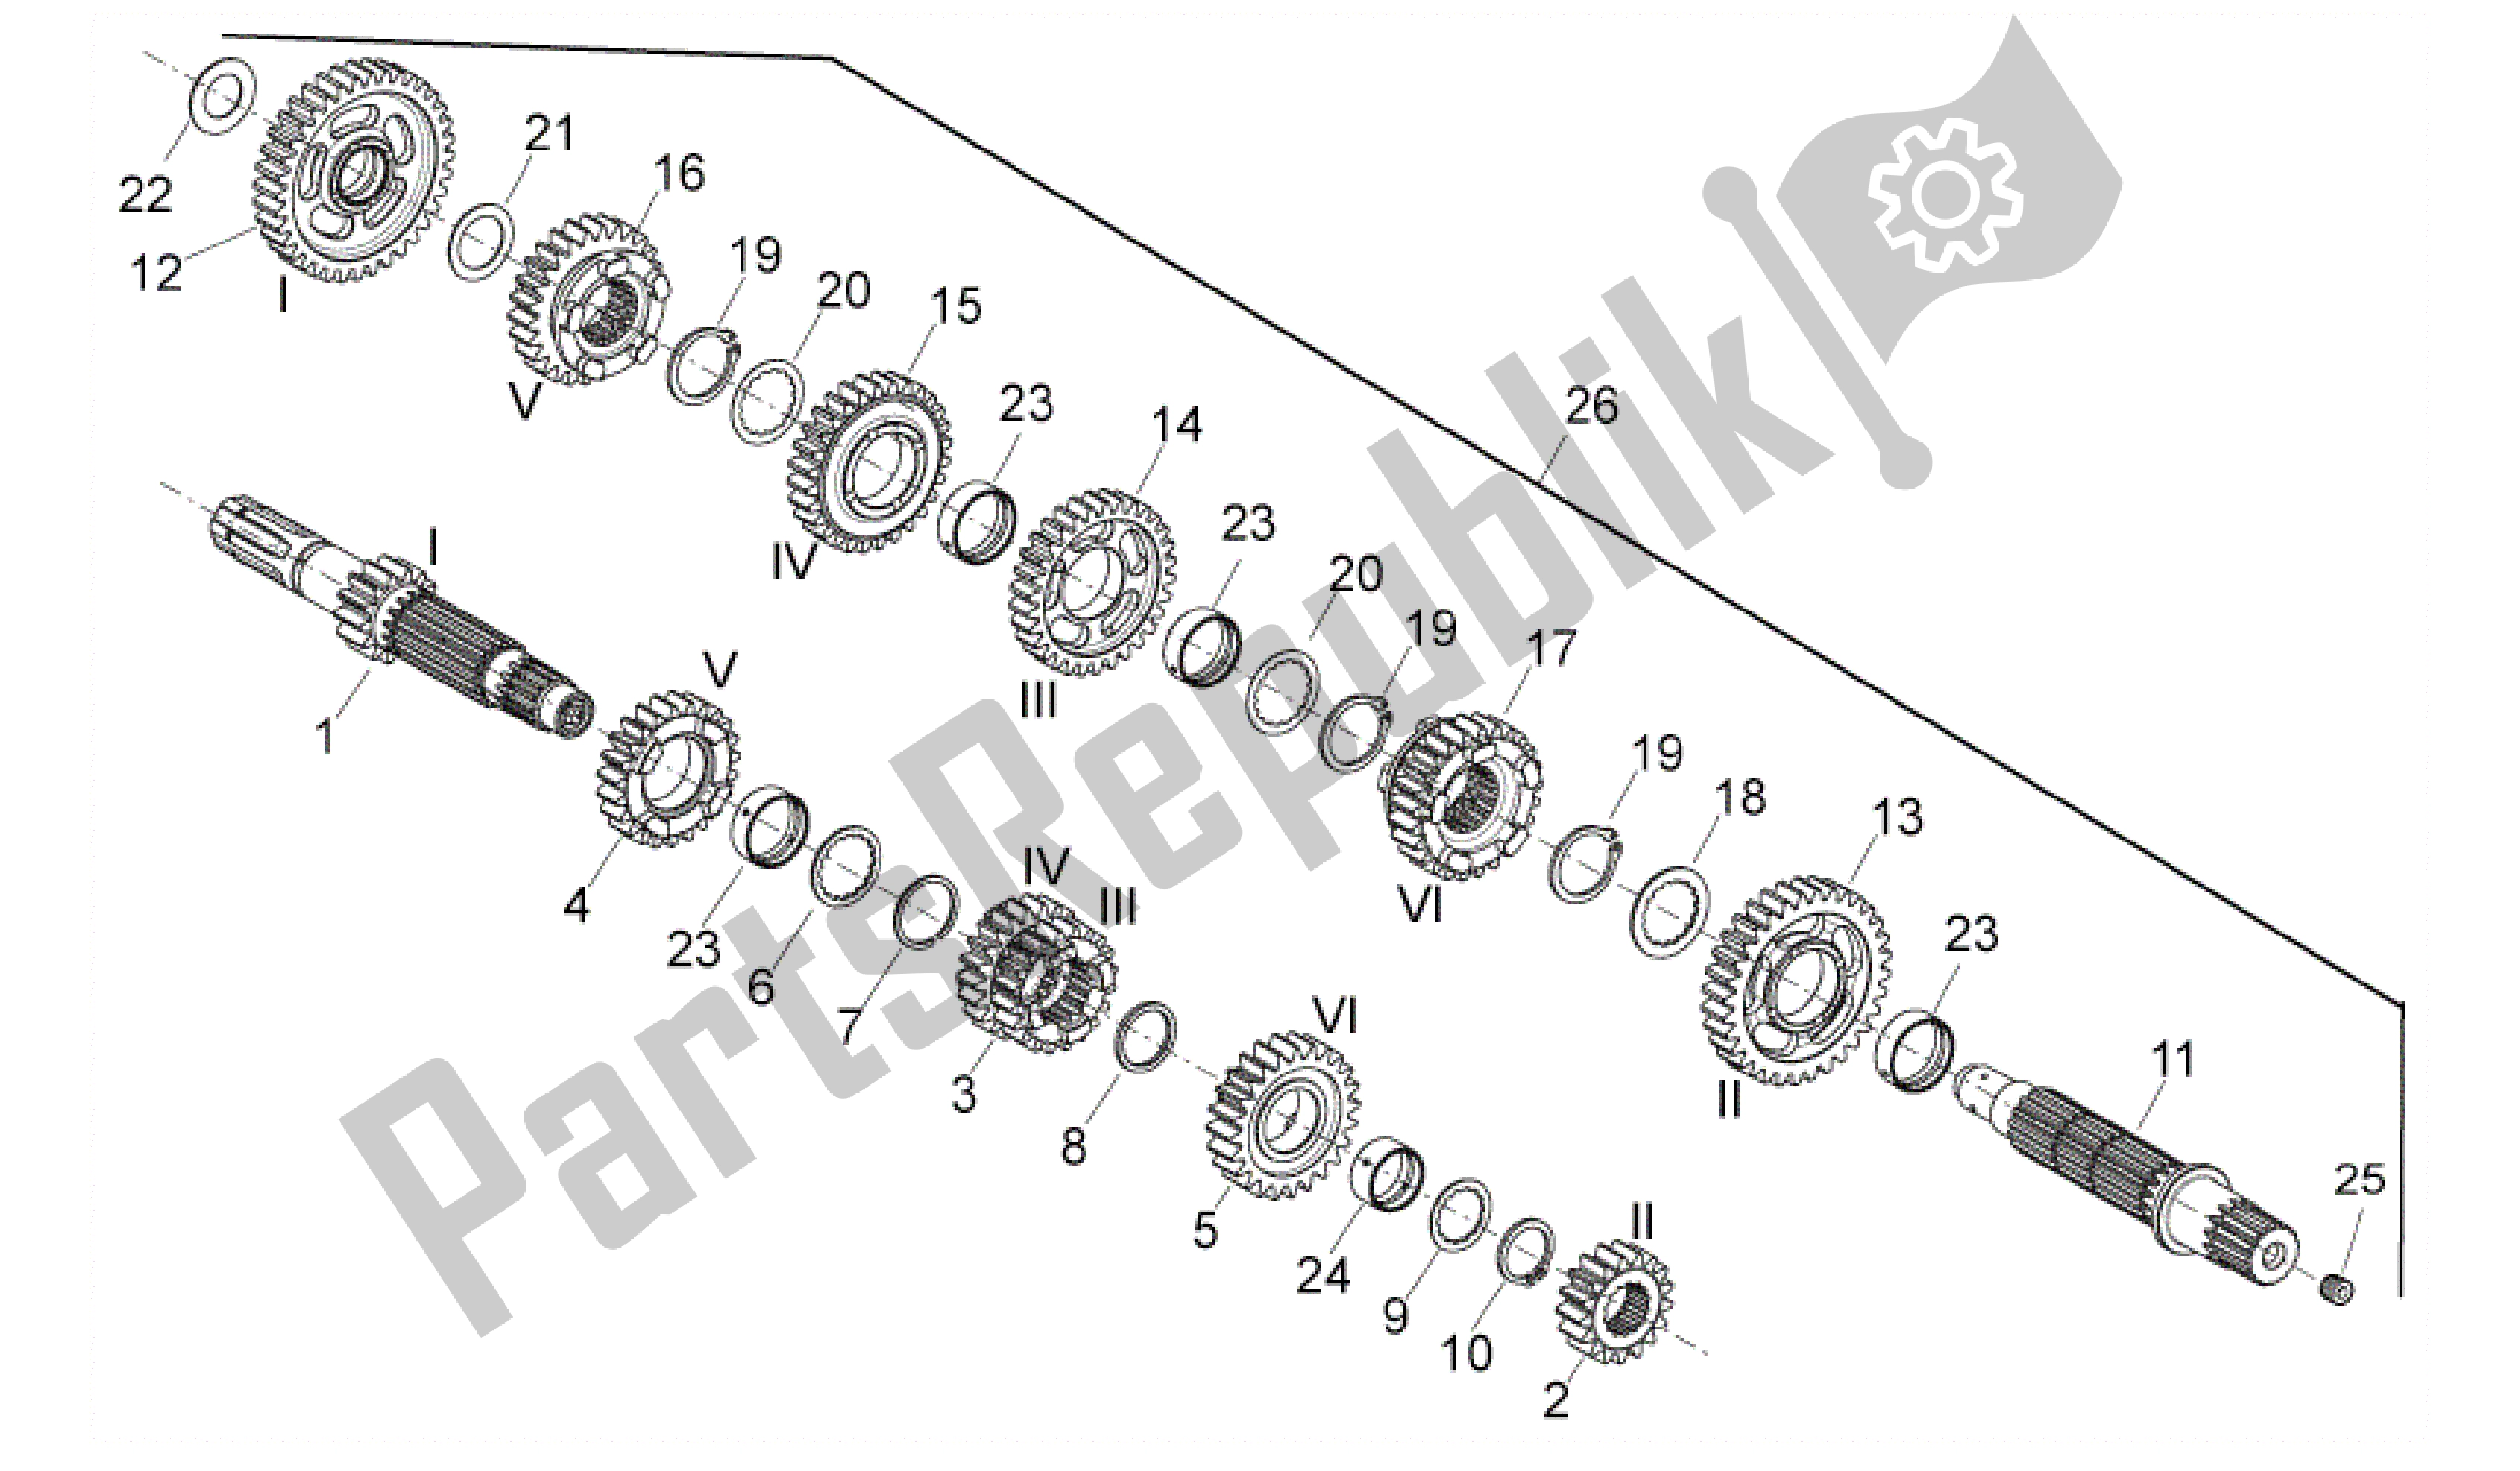 All parts for the Gear Box of the Aprilia Shiver 750 2011 - 2013